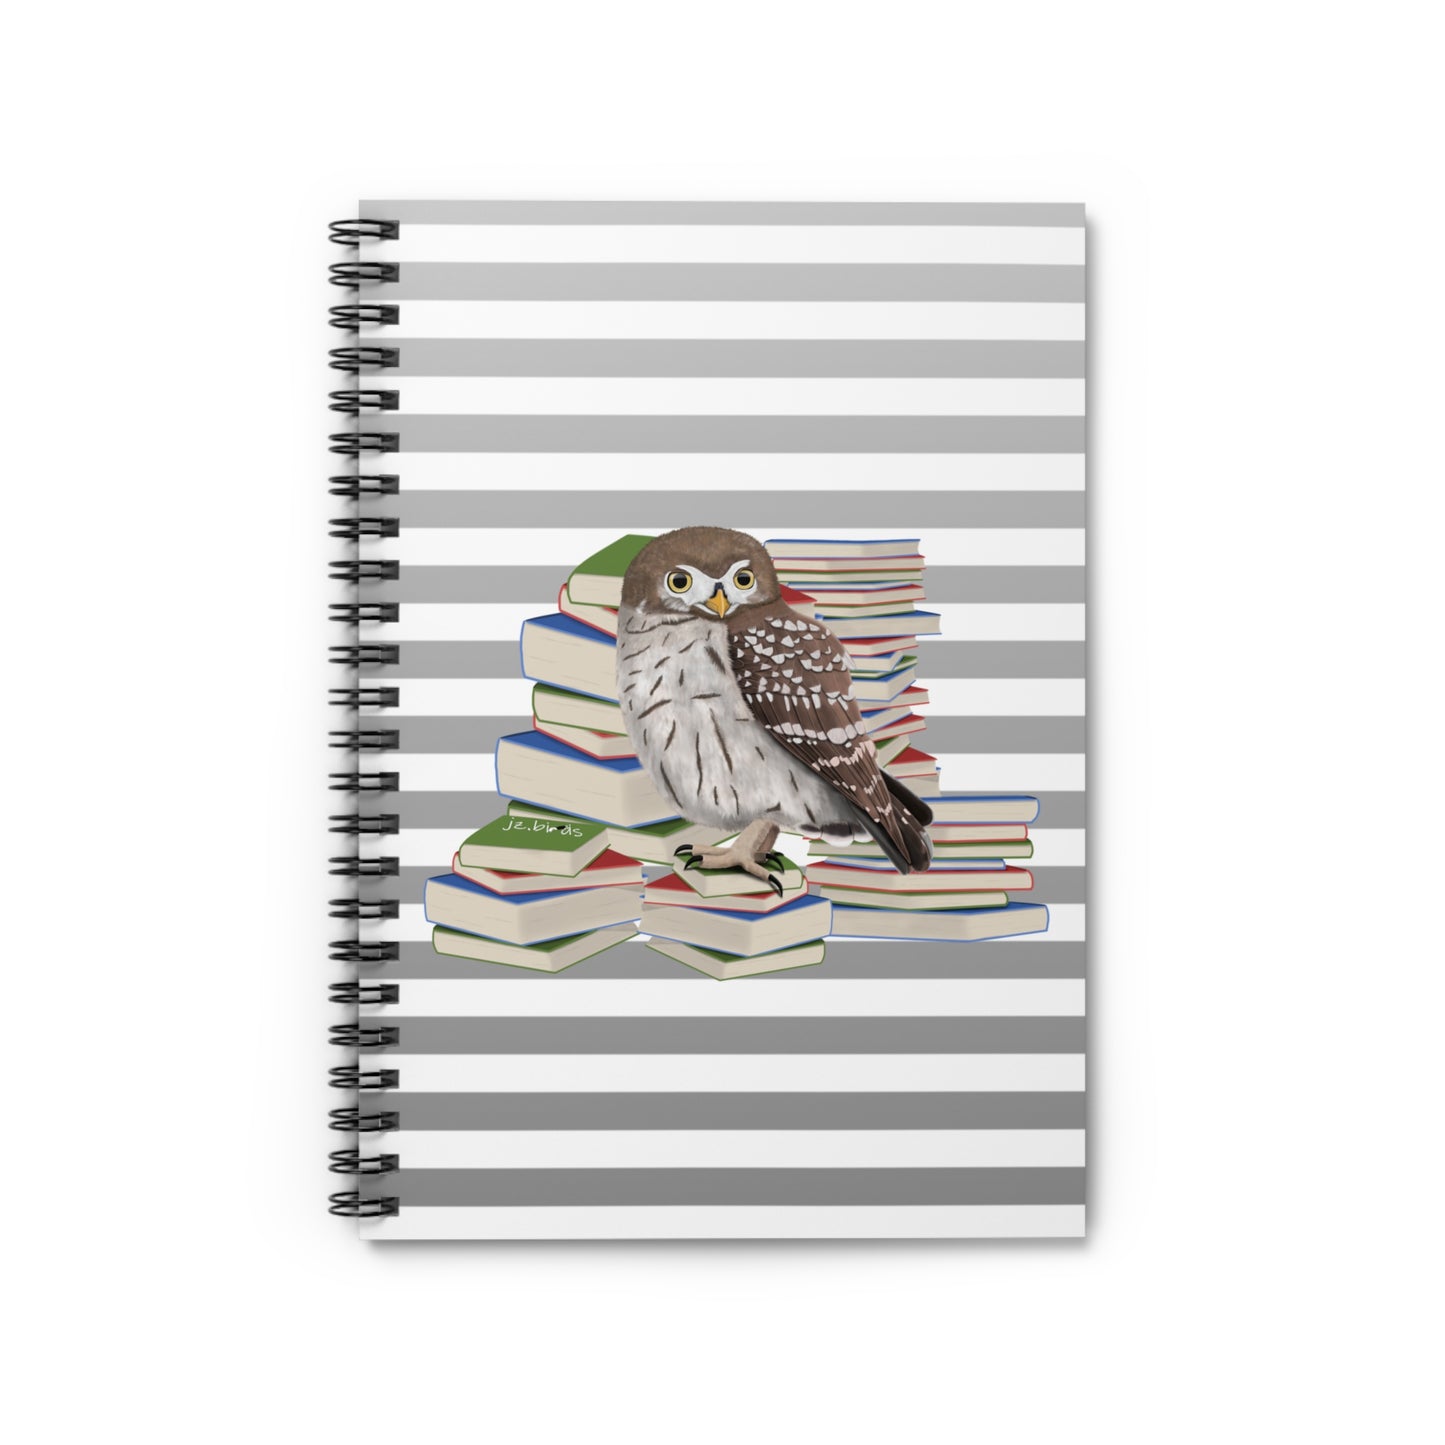 Owl Bird with Books Birdlover Bookworm Spiral Notebook Ruled Line